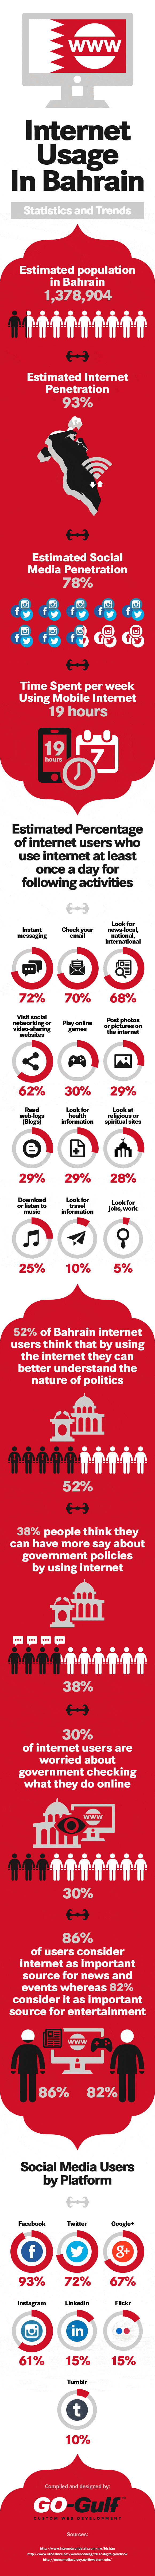 Internet Usage in Bahrain Infographic